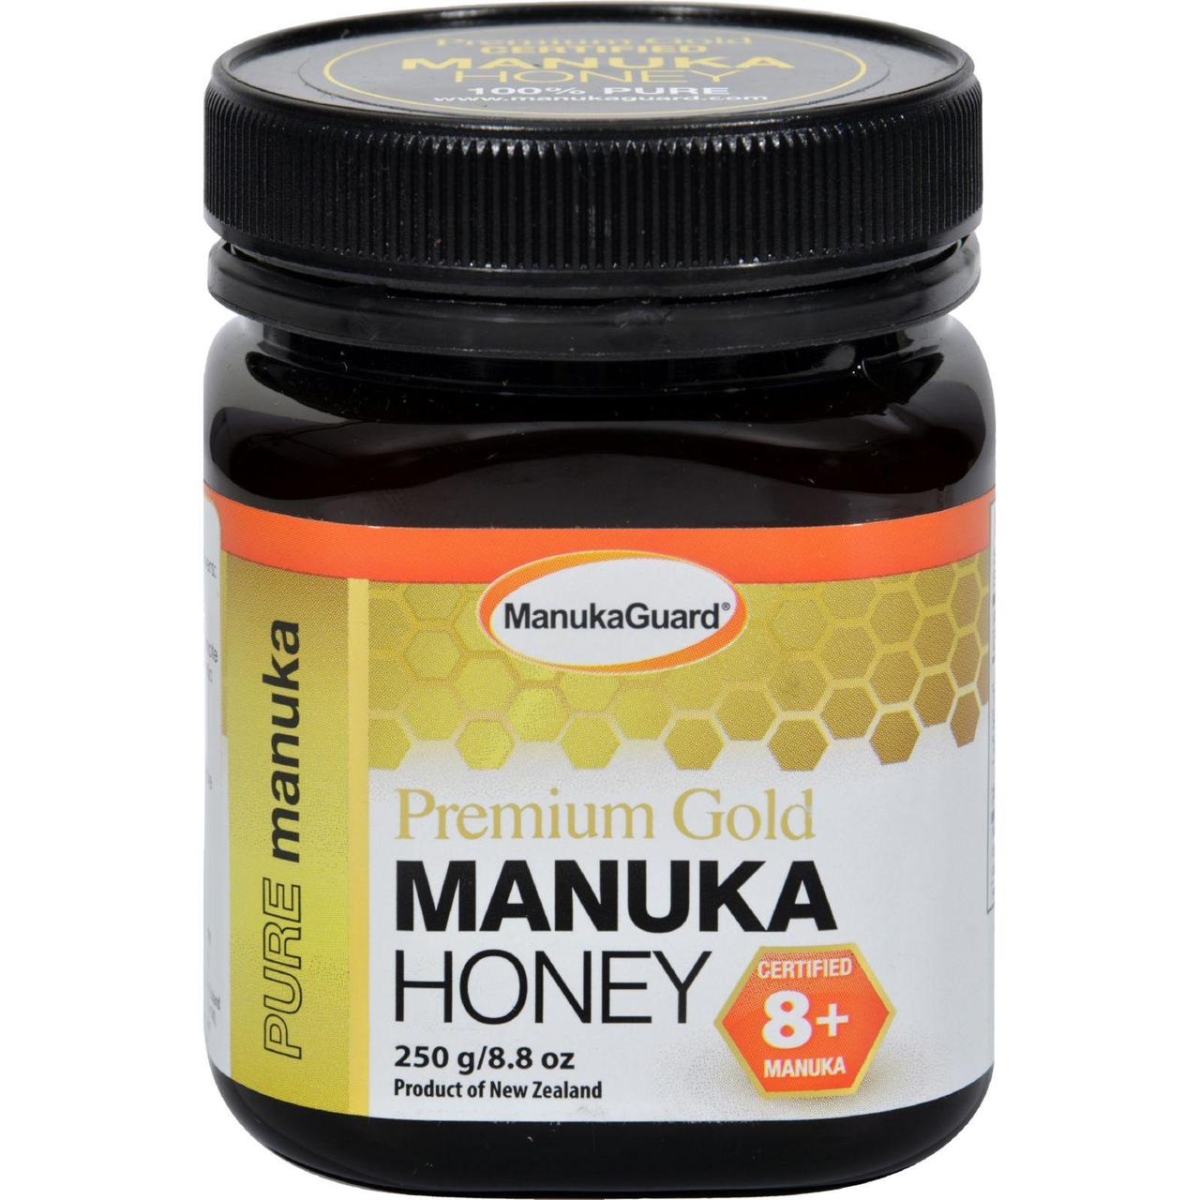 Manukaguard Hg1246131 8.8 Oz Premium Gold Manuka Honey 8 Plus